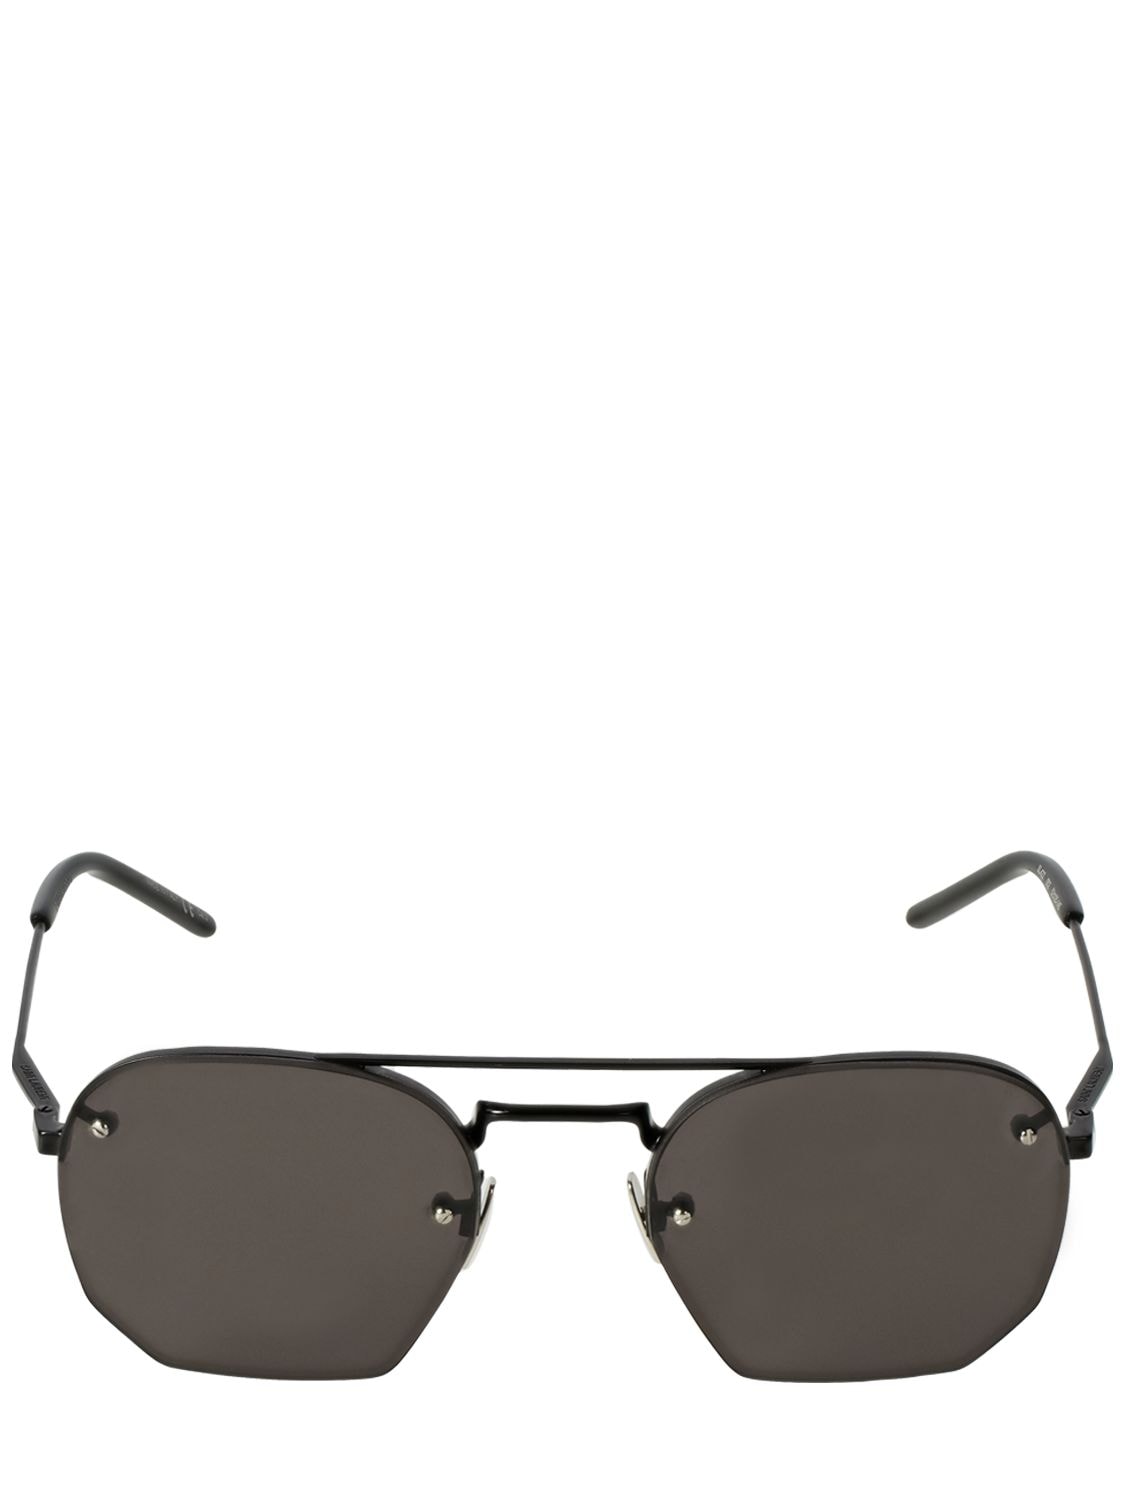 Image of Sl 422 Hexagonal Metal Sunglasses